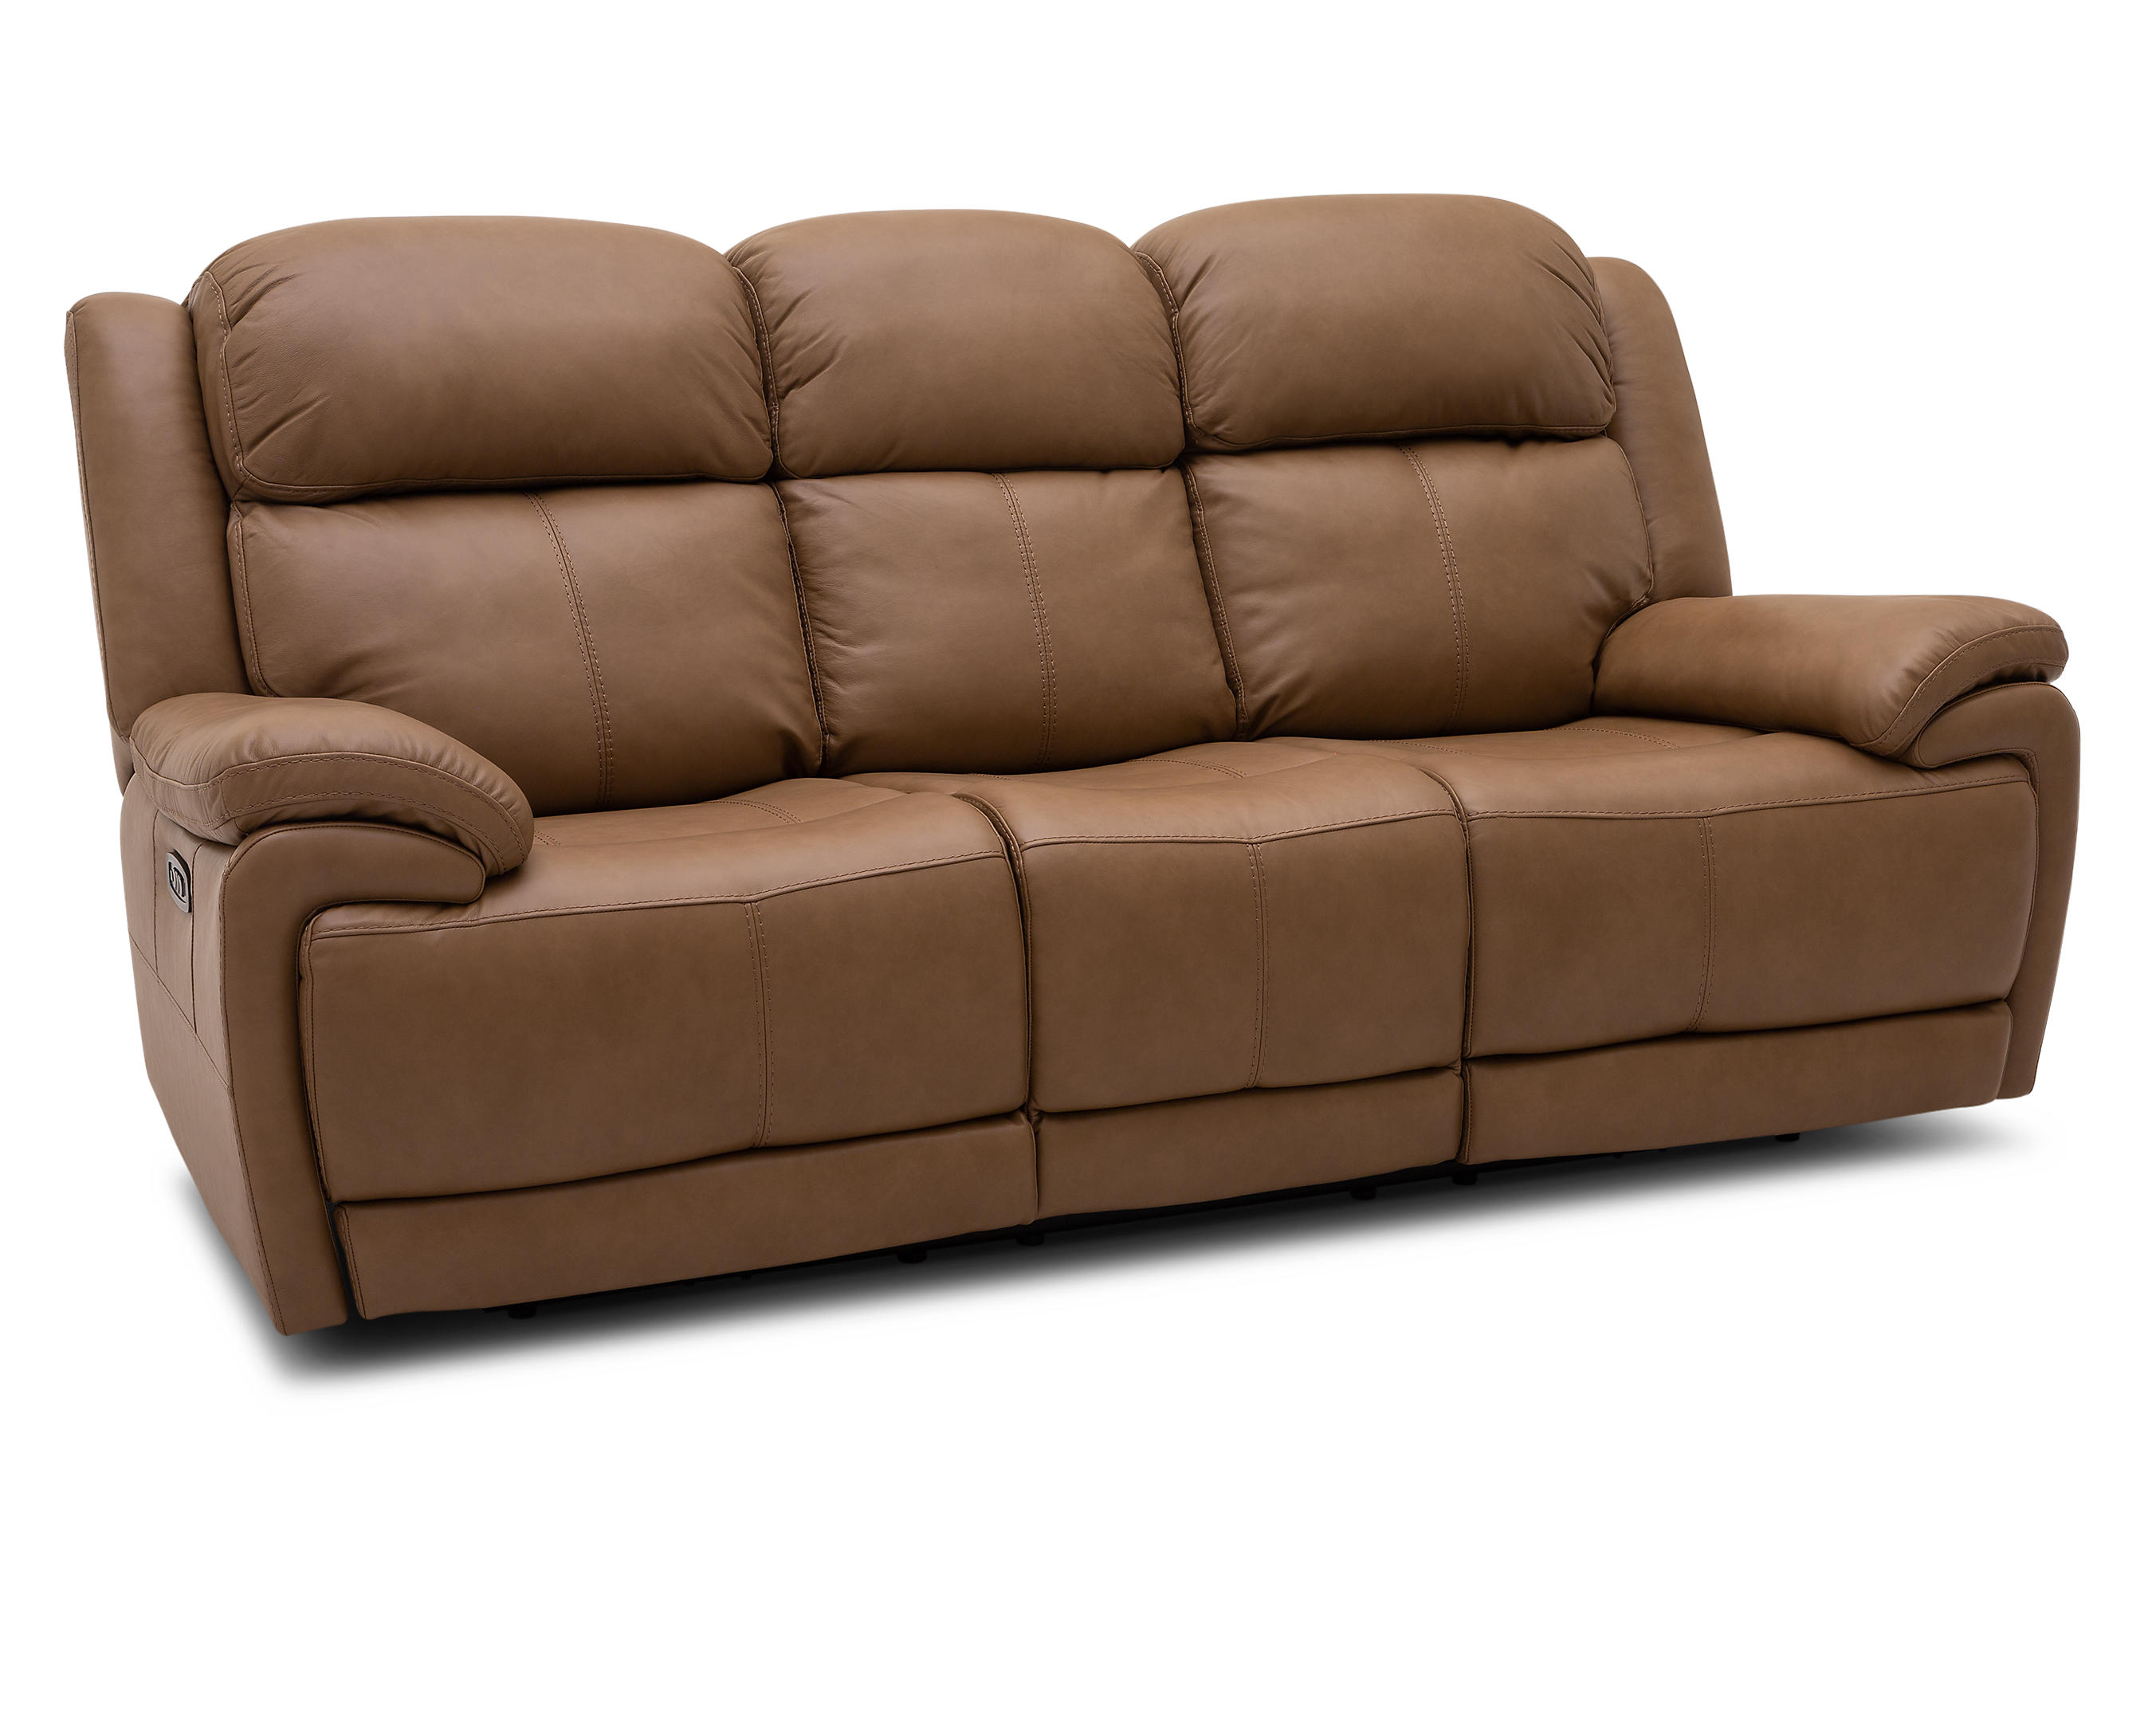 Avanti Power Reclining Sofa Furniture Row, Avanti 5 Piece Power Leather Sectional Sofa